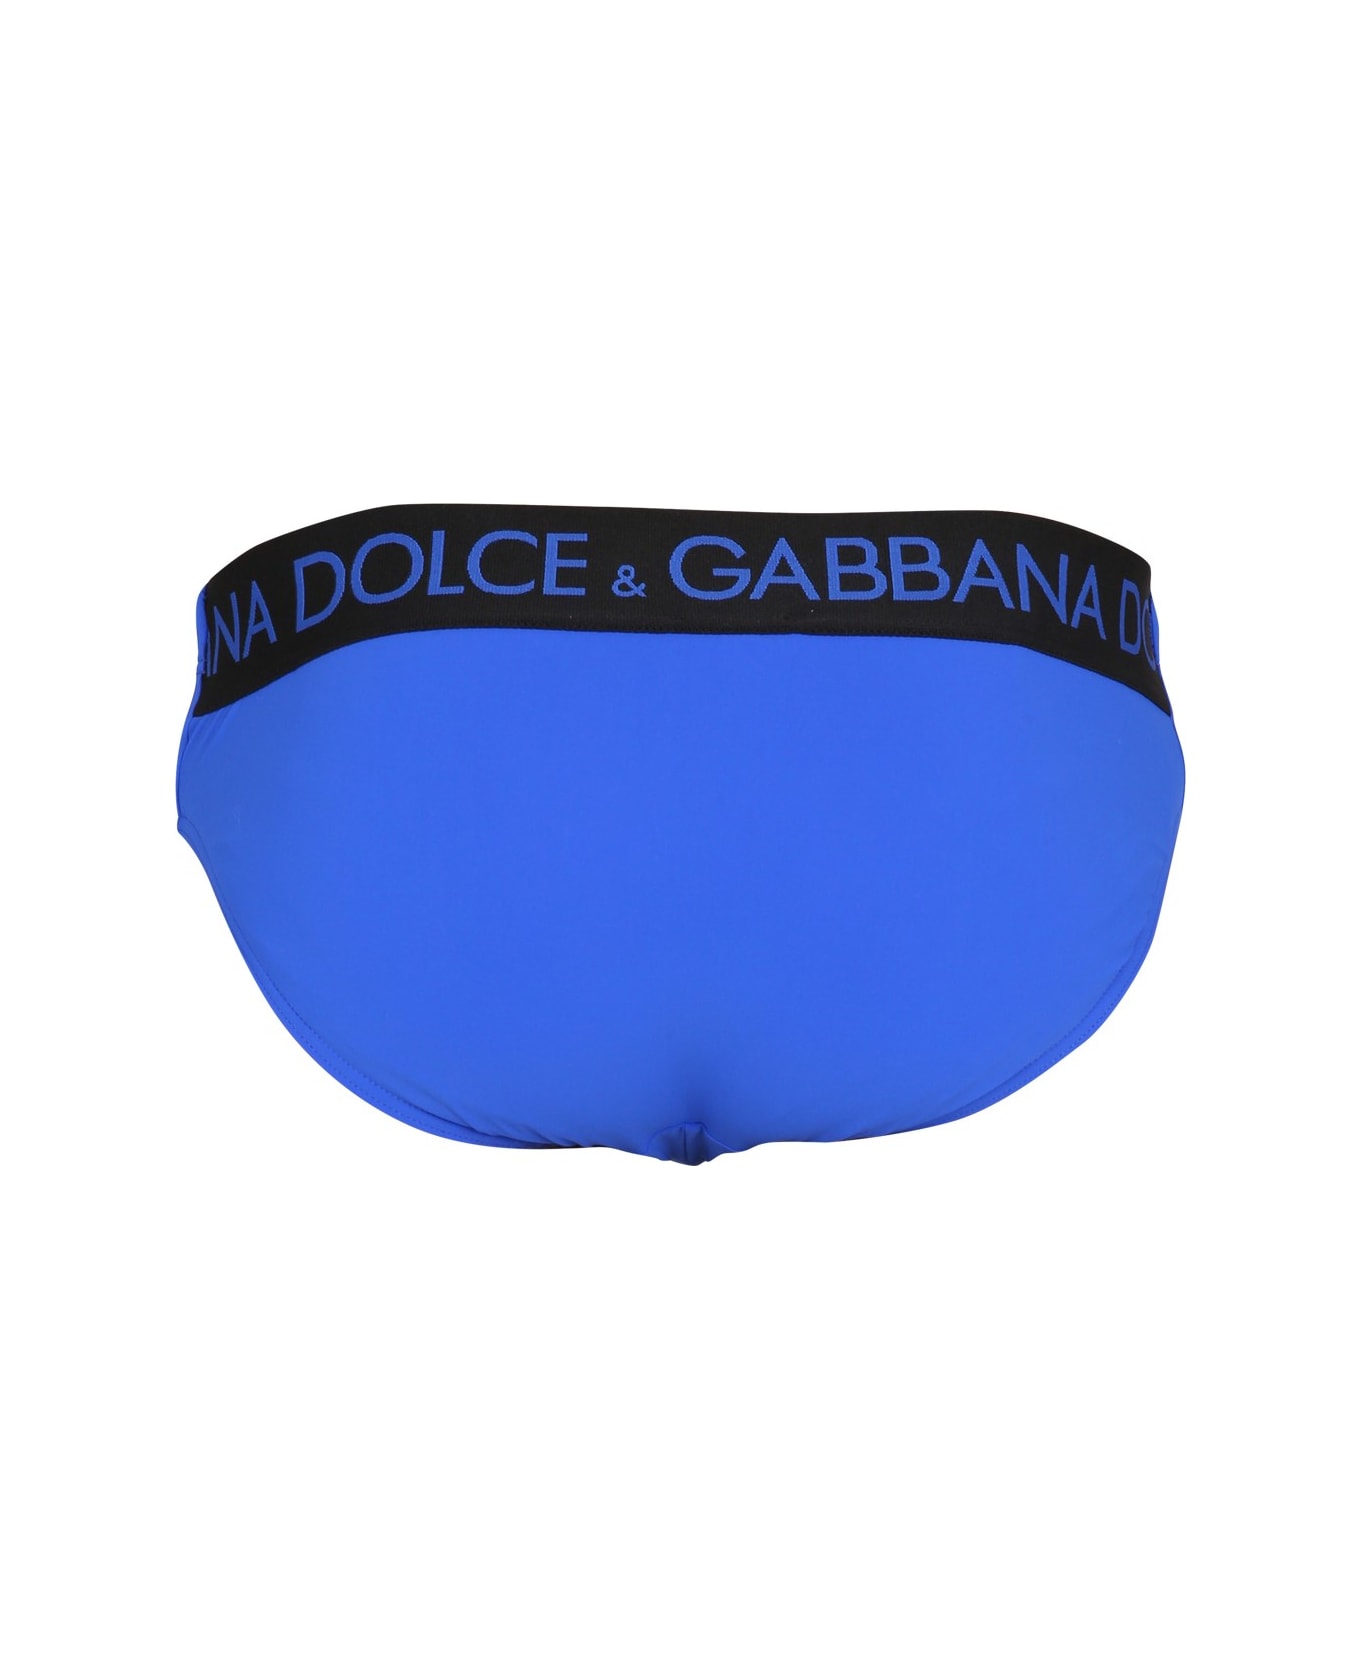 Dolce & Gabbana Swimsuit Briefs - BLU